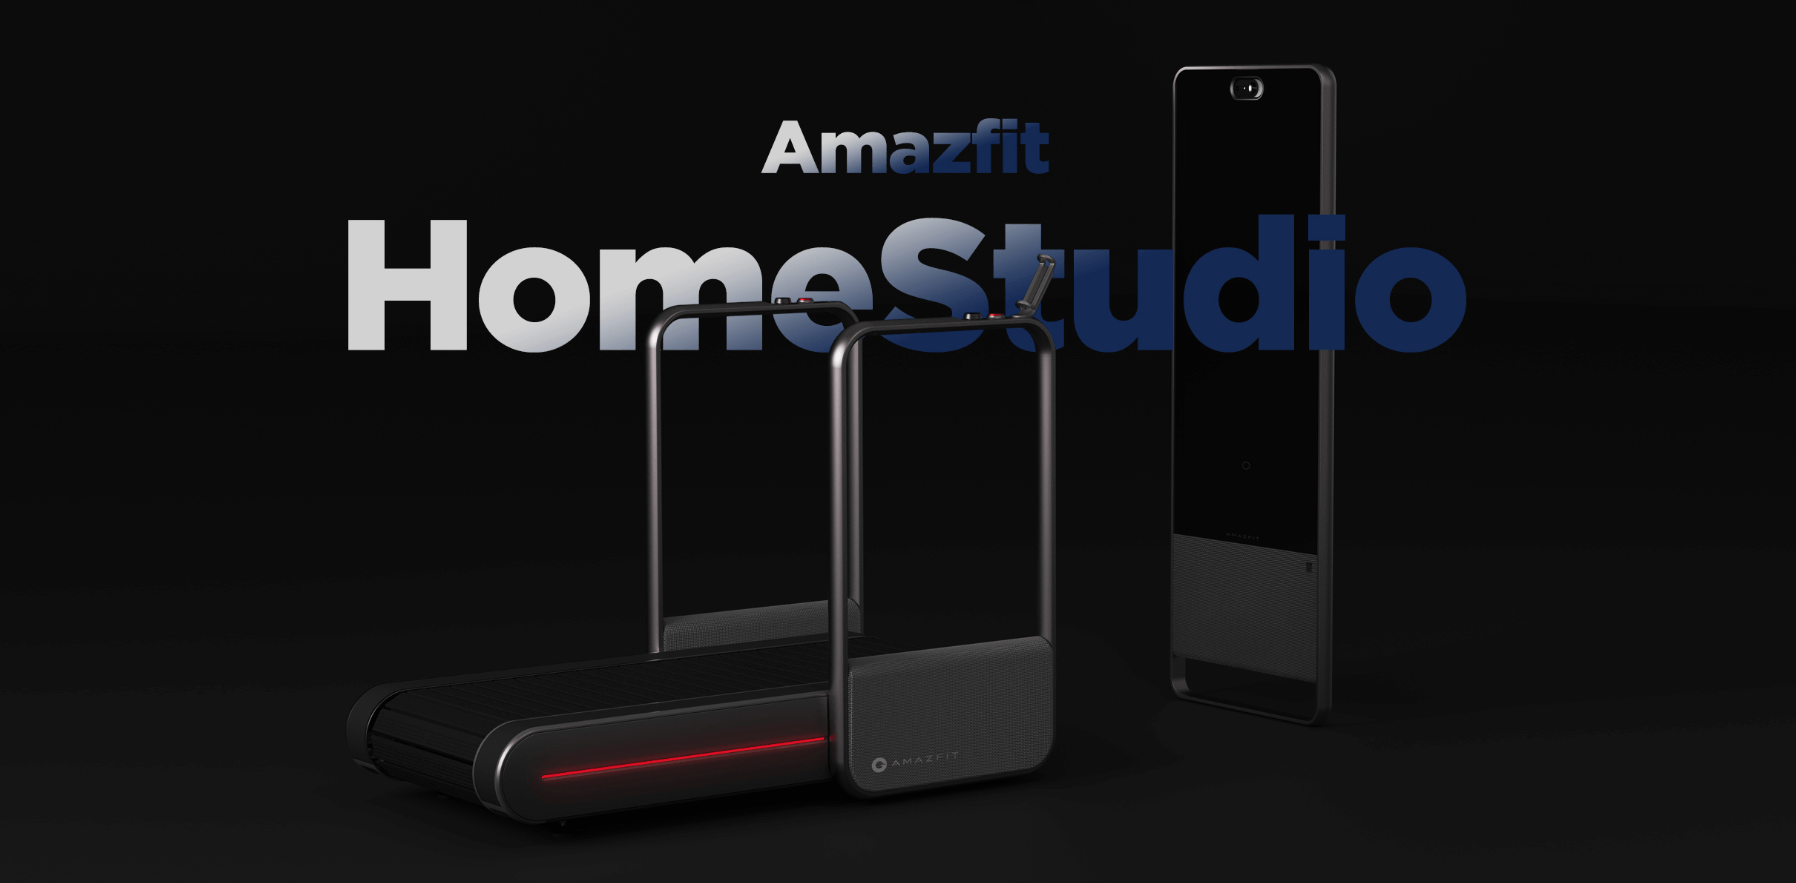 Classic Amazfit home studio price with New Ideas